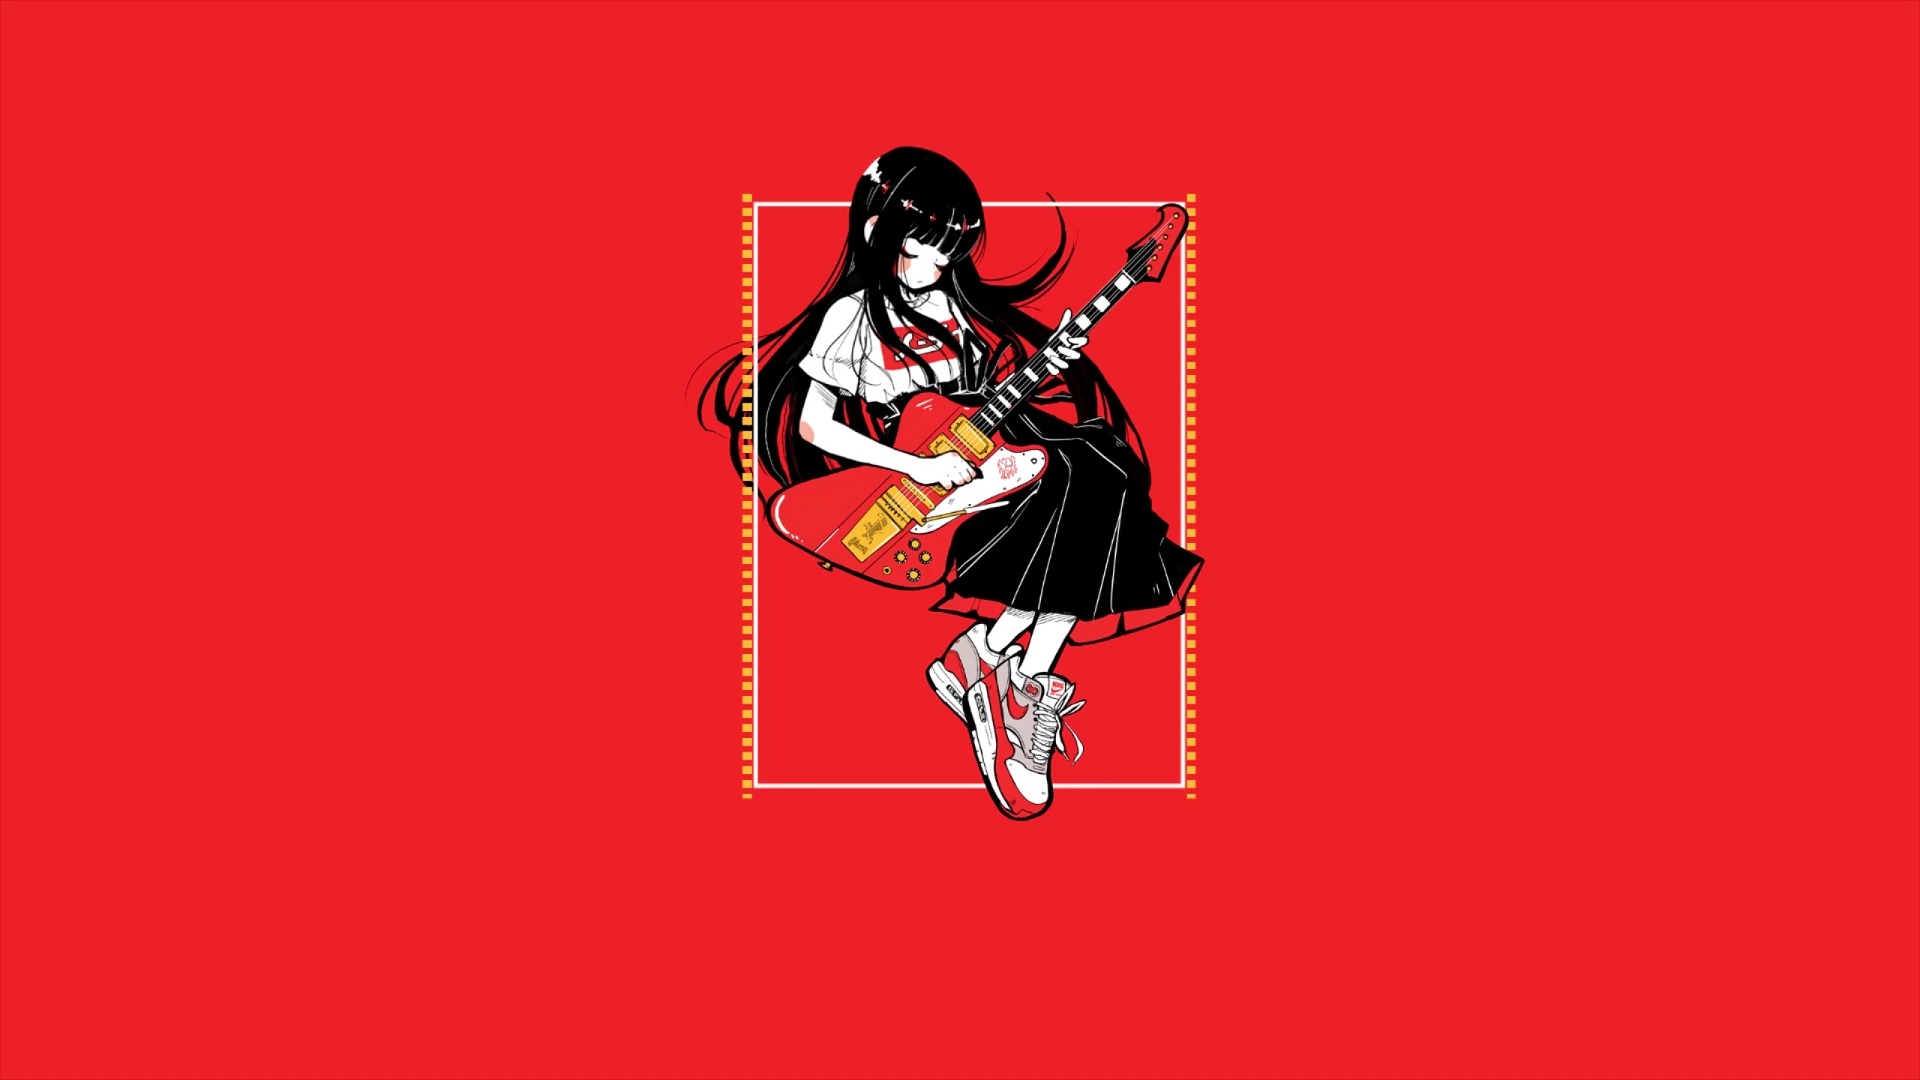 Electric Guitar Loli Anime Girl Live Wallpaper - MoeWalls